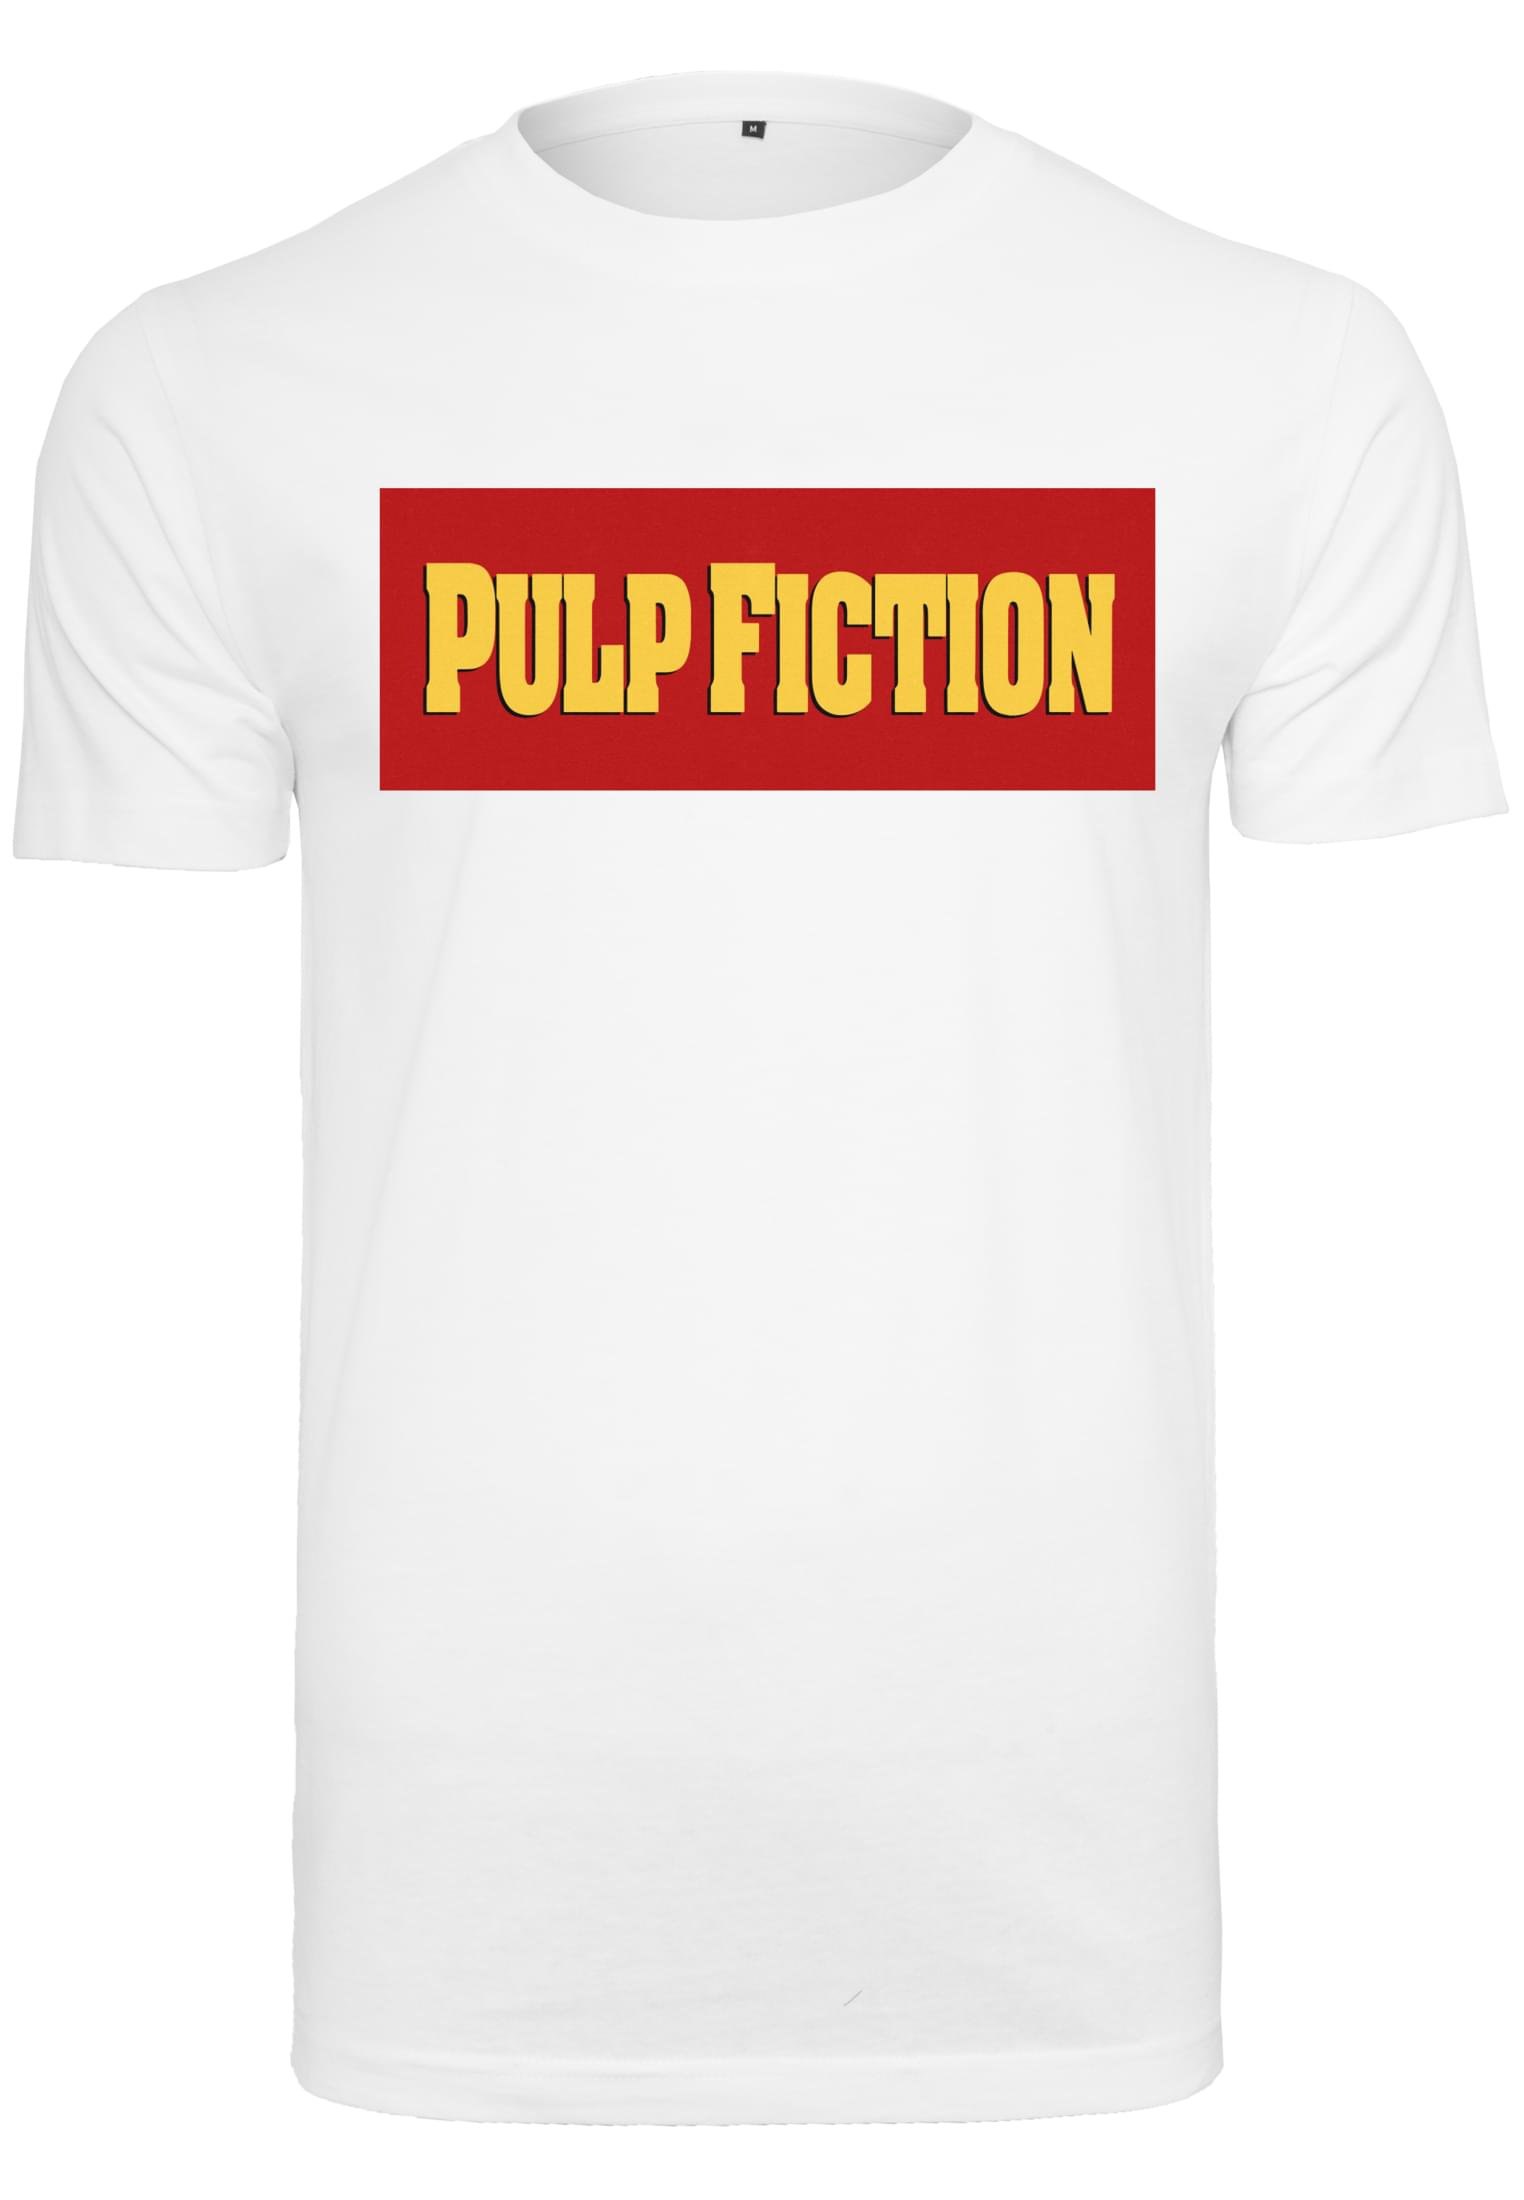 Pulp Fiction Logo Tee